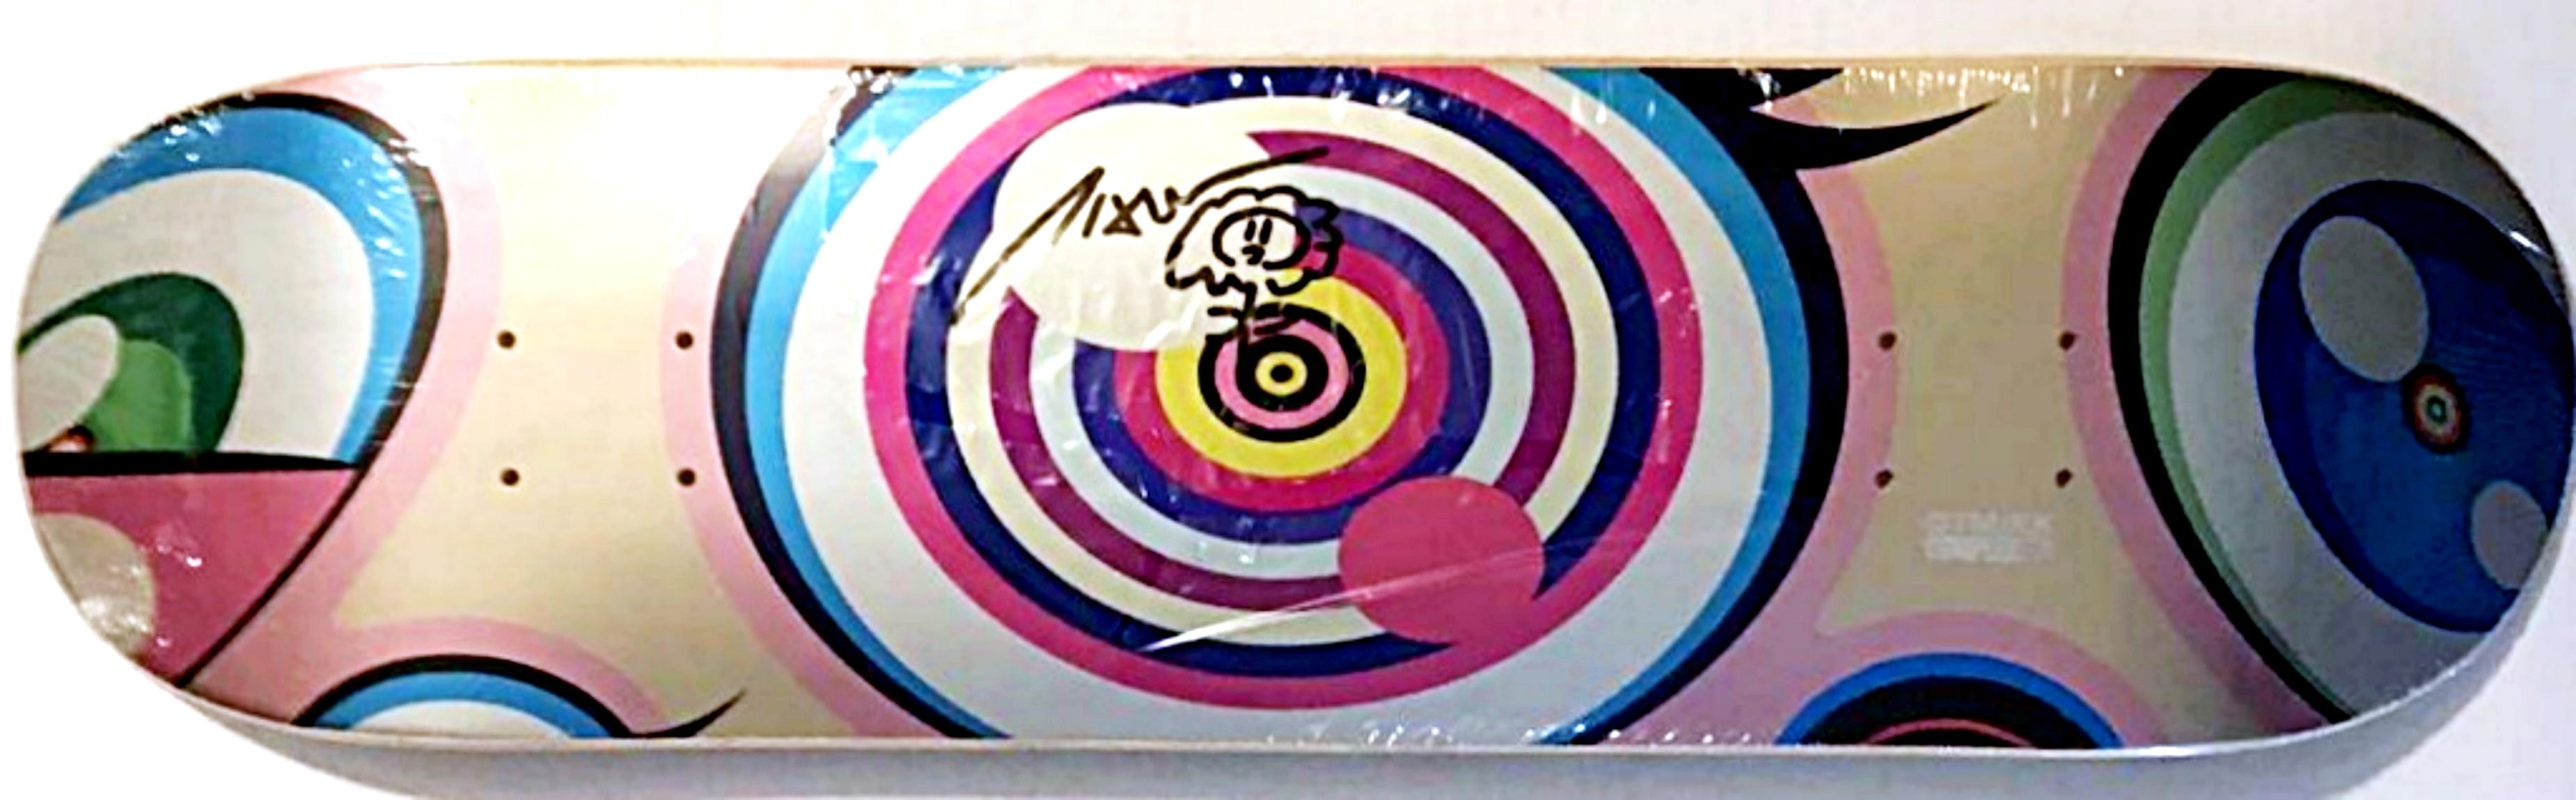 Original unique signed Flower Drawing limited edition skateboard Street Pop Art  - Mixed Media Art by Takashi Murakami